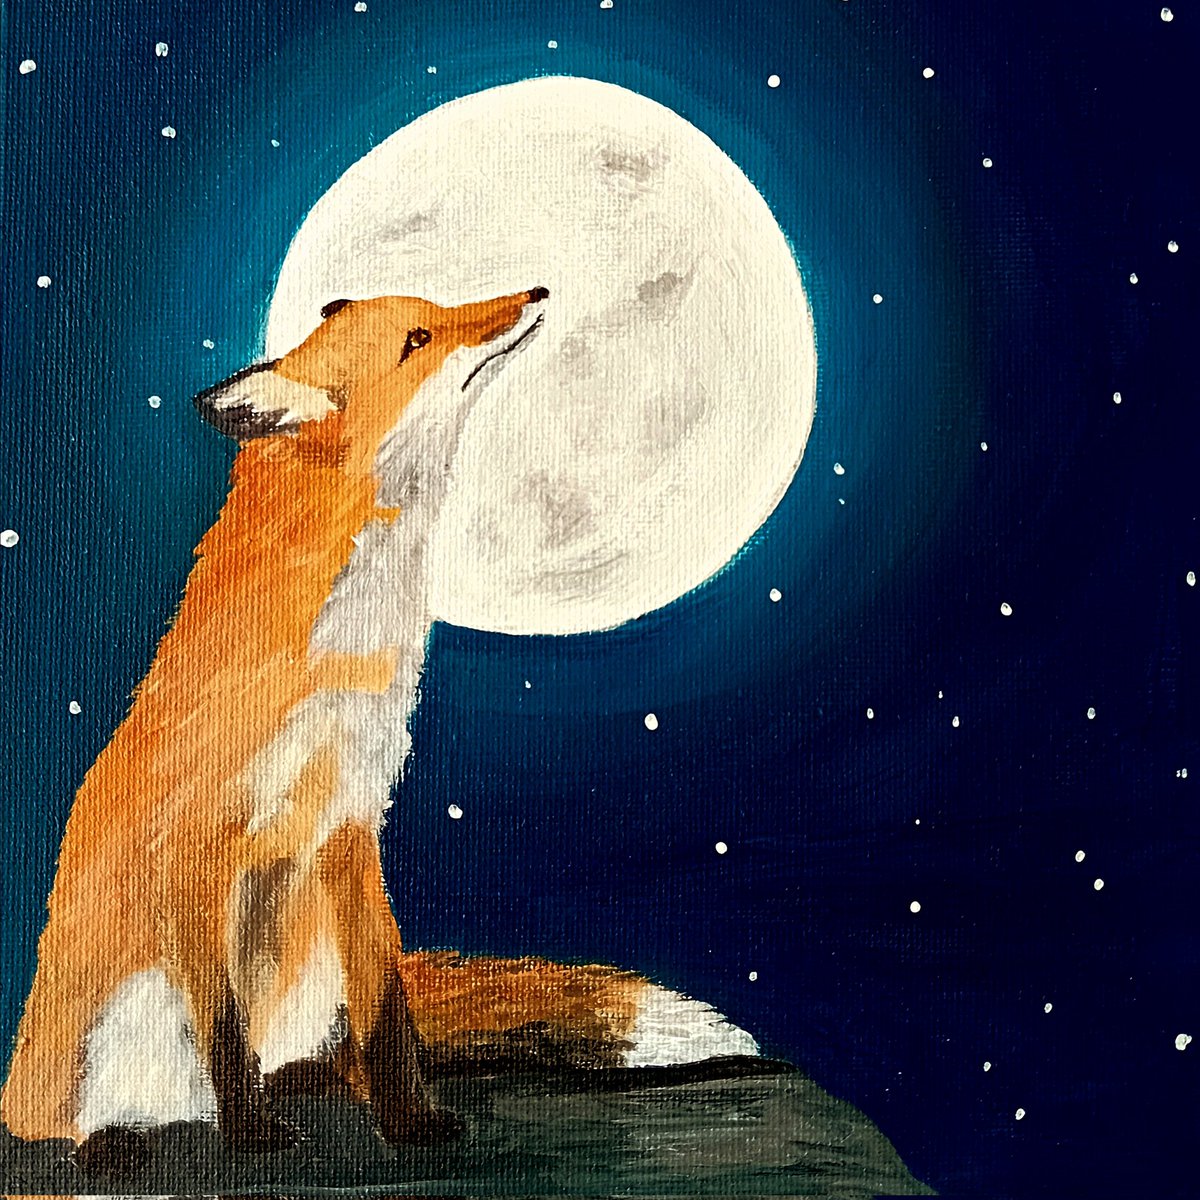 Another Fox and Moon.
Acrylic on 8' x 8' canvas
#fox #moon #welshart #art